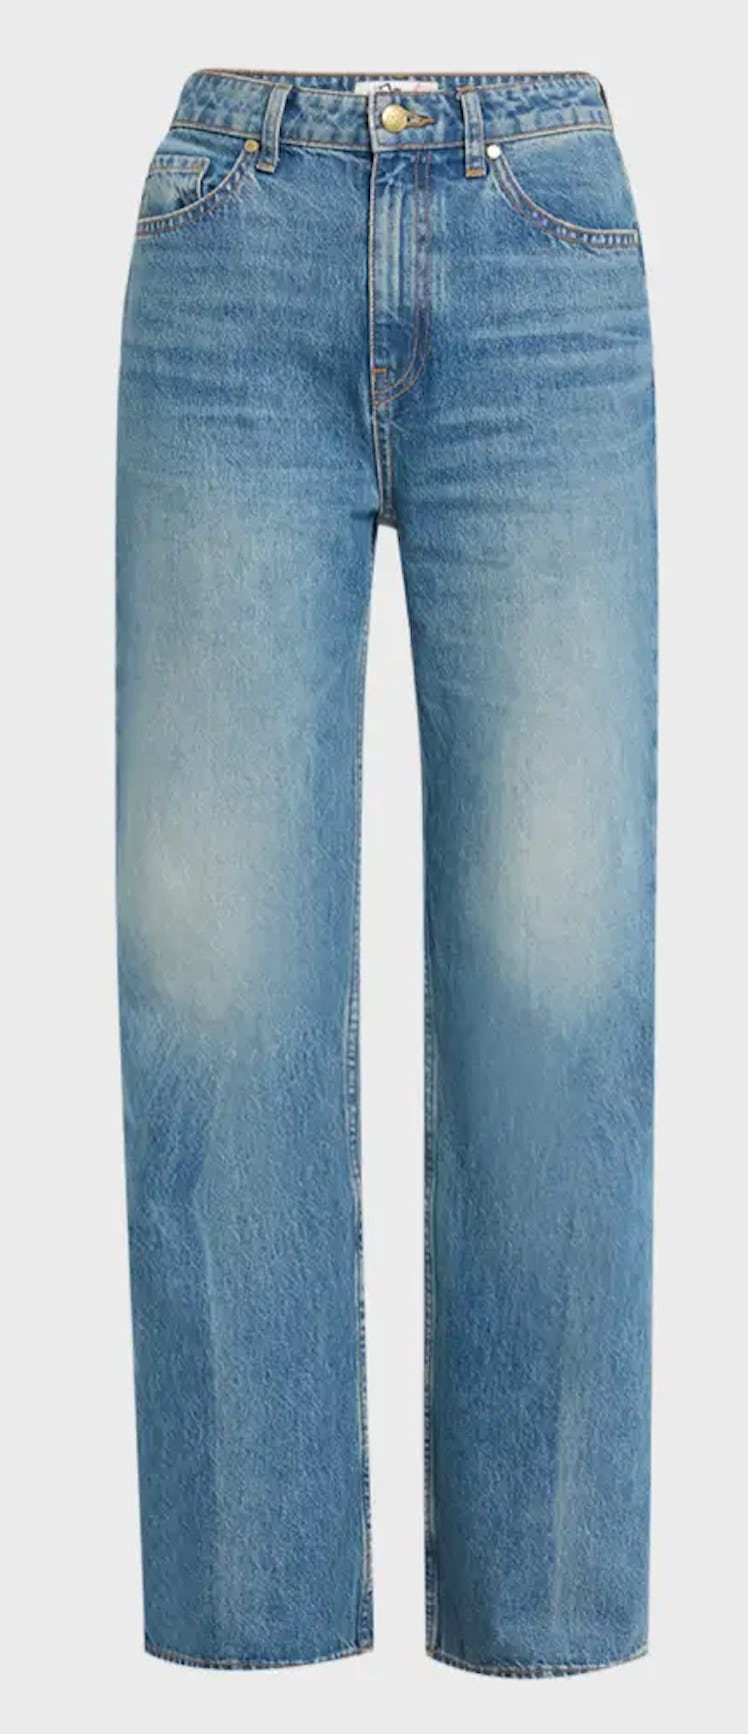 blue medium wash denim jeans